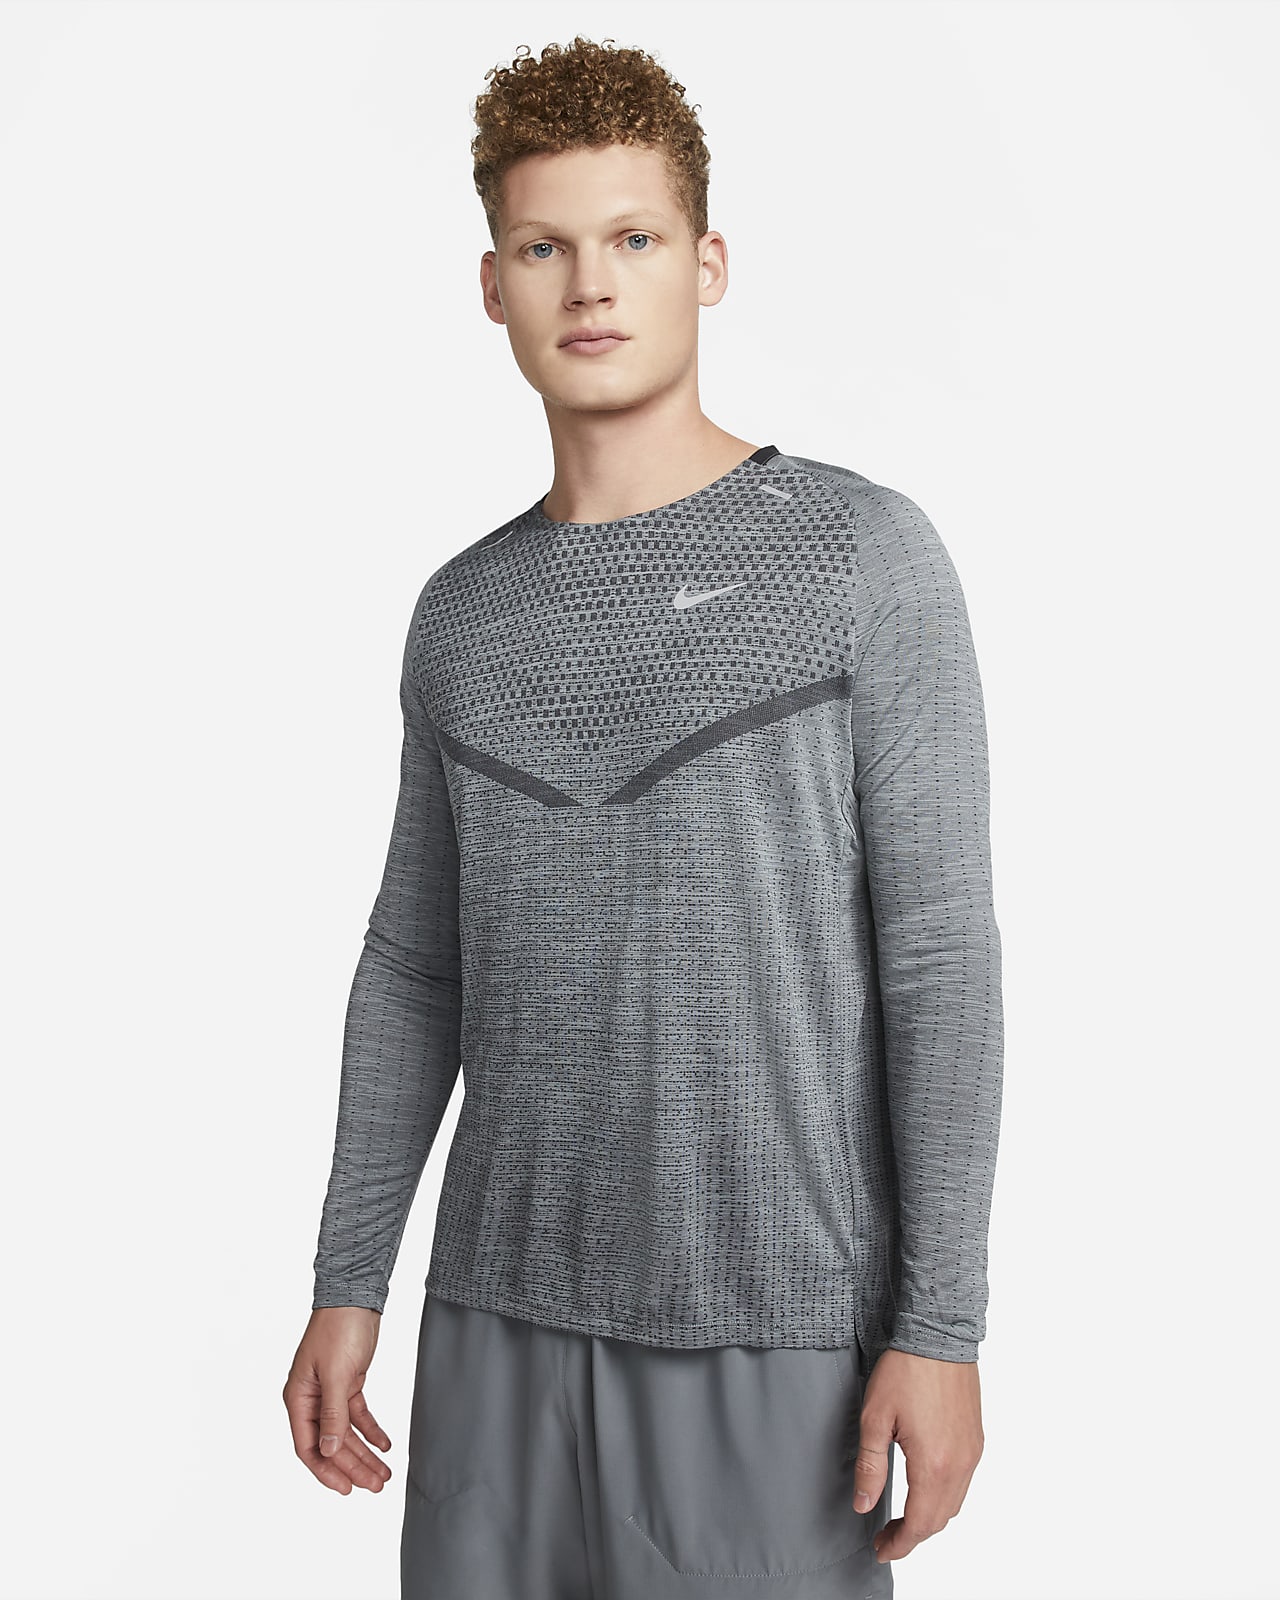 Nike TechKnit Men's Dri-FIT ADV Long-Sleeve Running Top